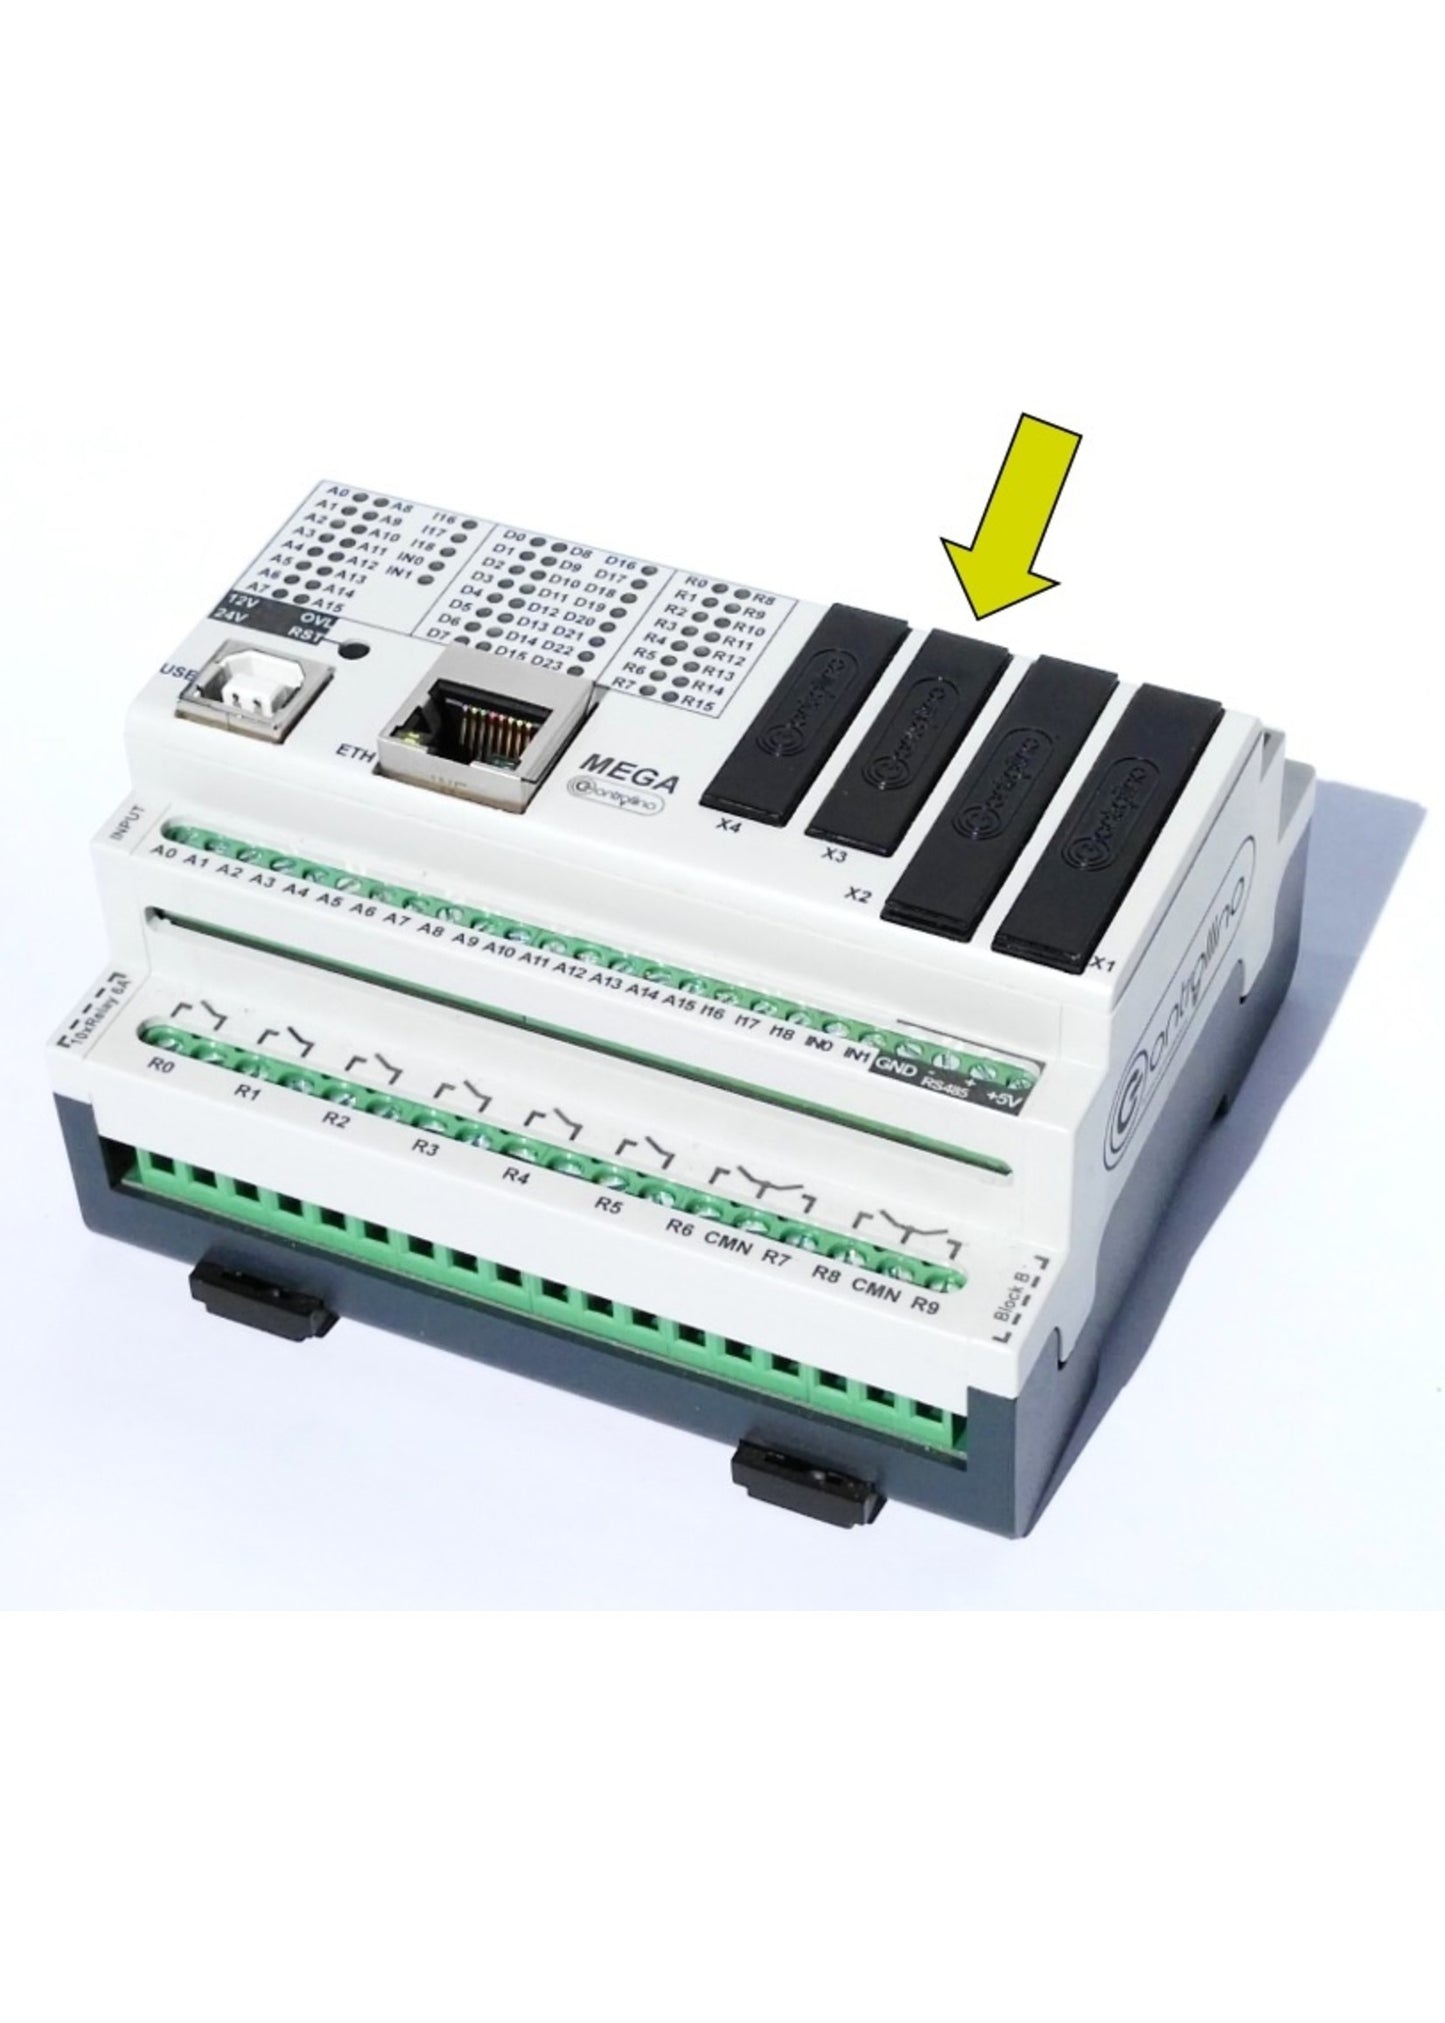 Pinheader Protection Cap for 20-way IDC Socket (MEGA only)